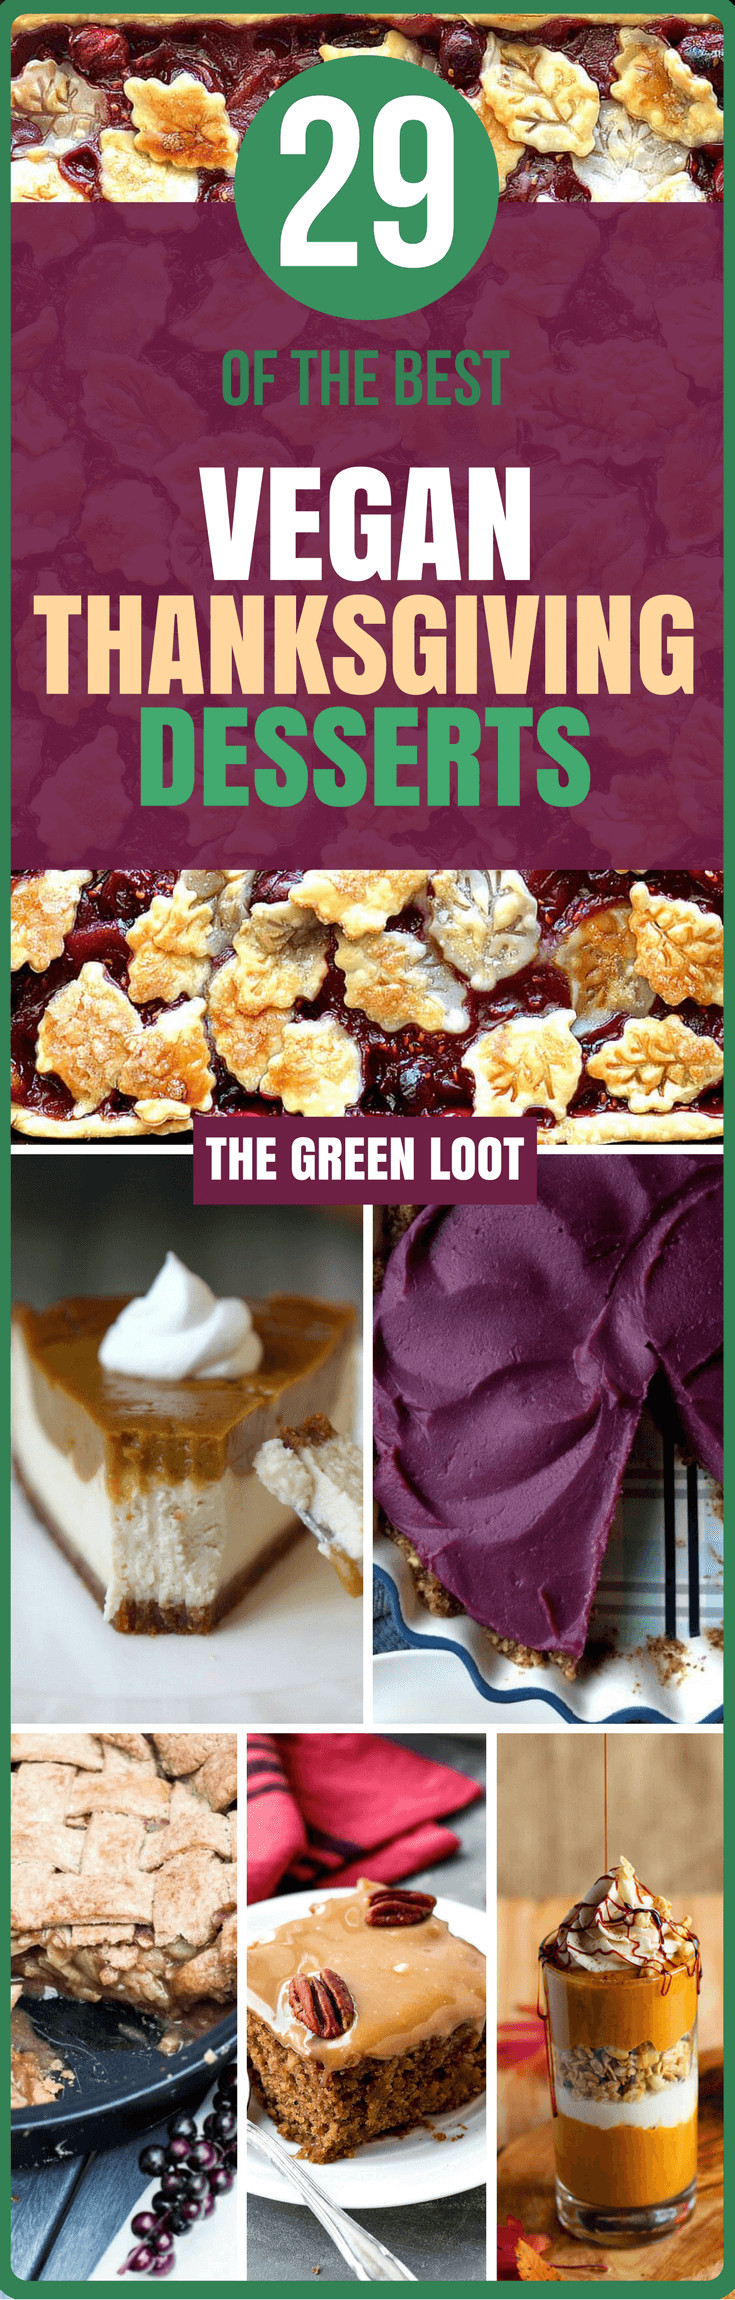 Vegan Thanksgiving Dessert Recipes
 The Best 29 Vegan Thanksgiving Dessert Recipes The Green